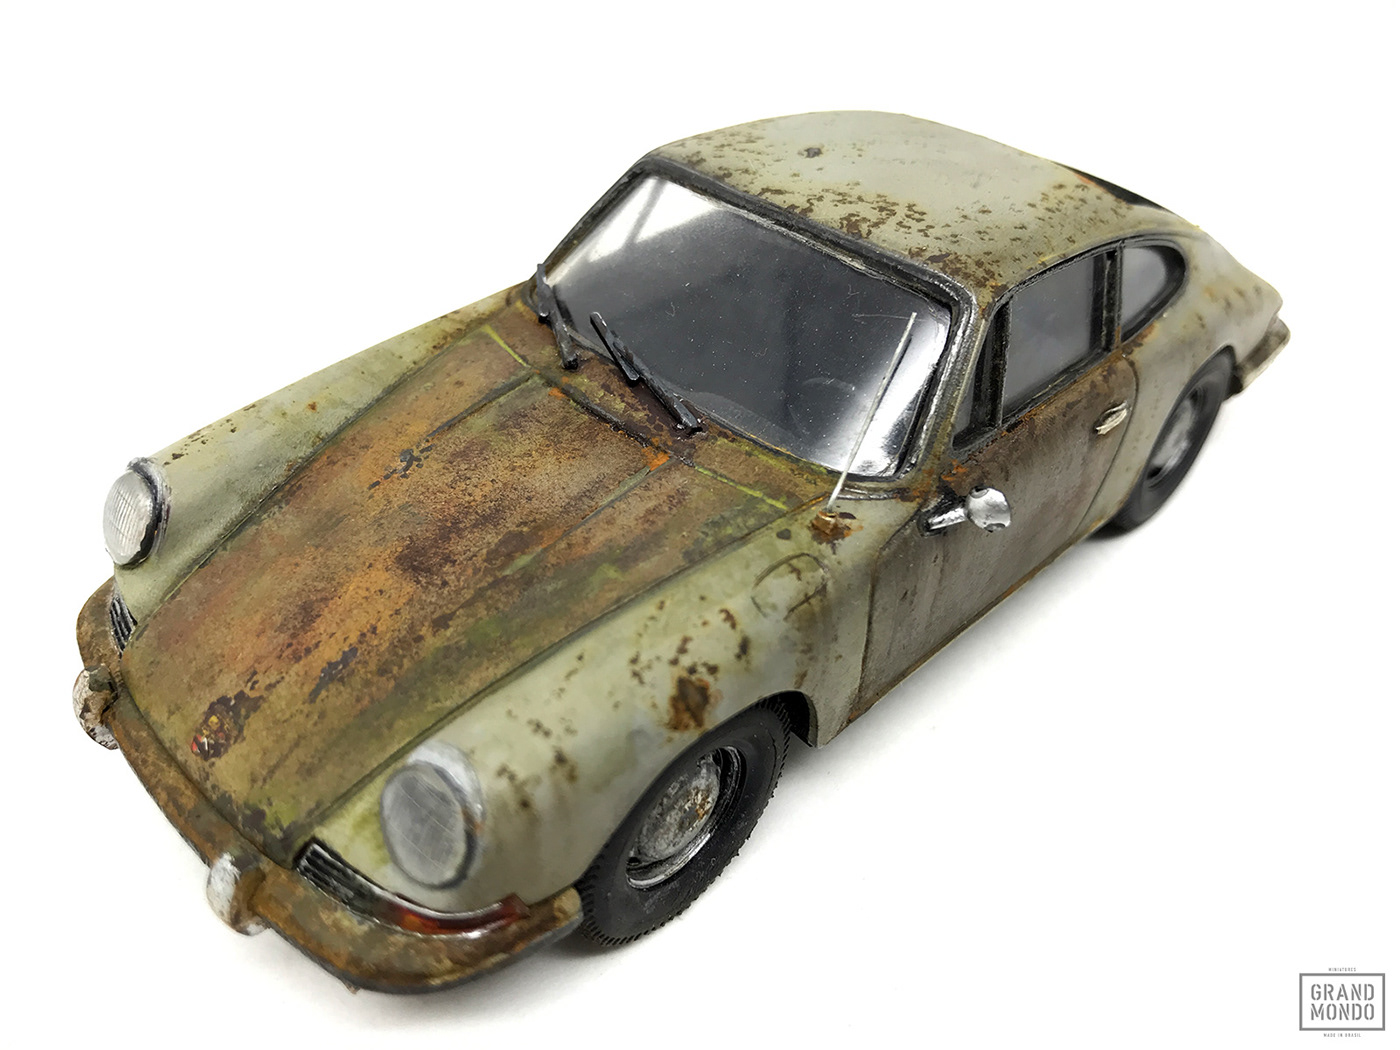 Miniature Diorama abandoned Porsche automotive   scale model art grandmondo handmade process